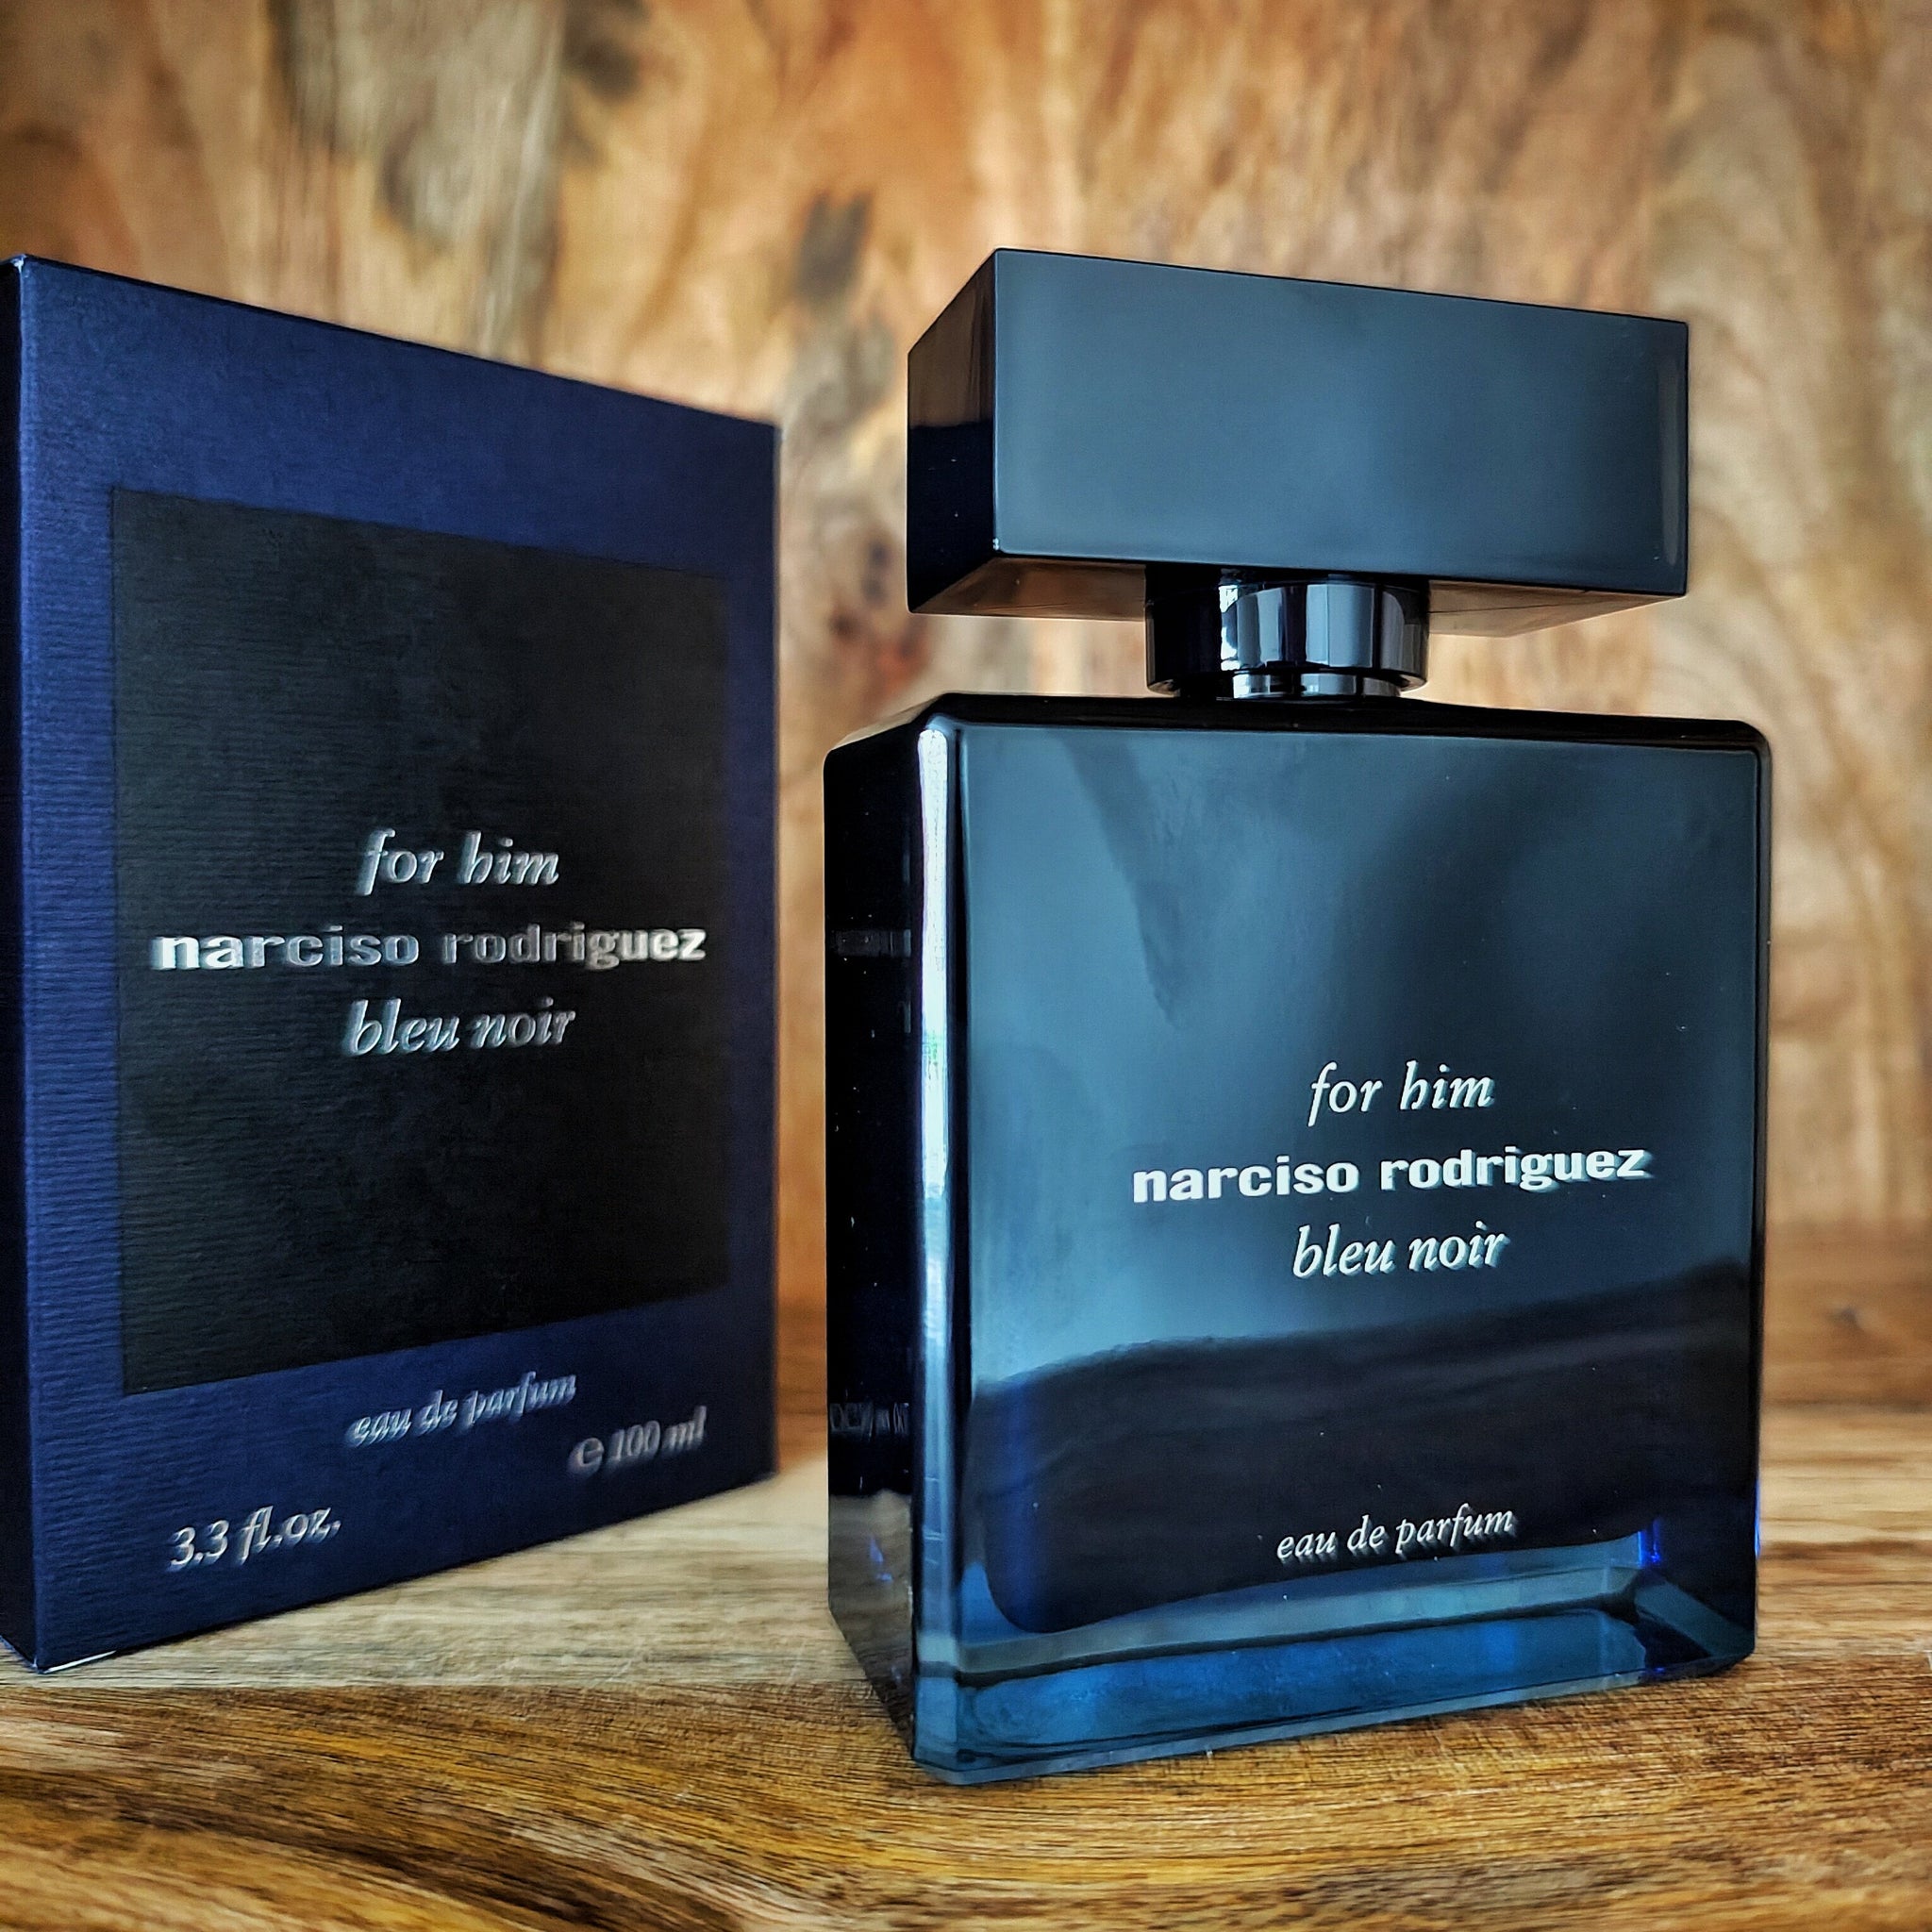 Narciso Rodriguez Bleu Noir for Him - 50ml Eau de Parfum Spray